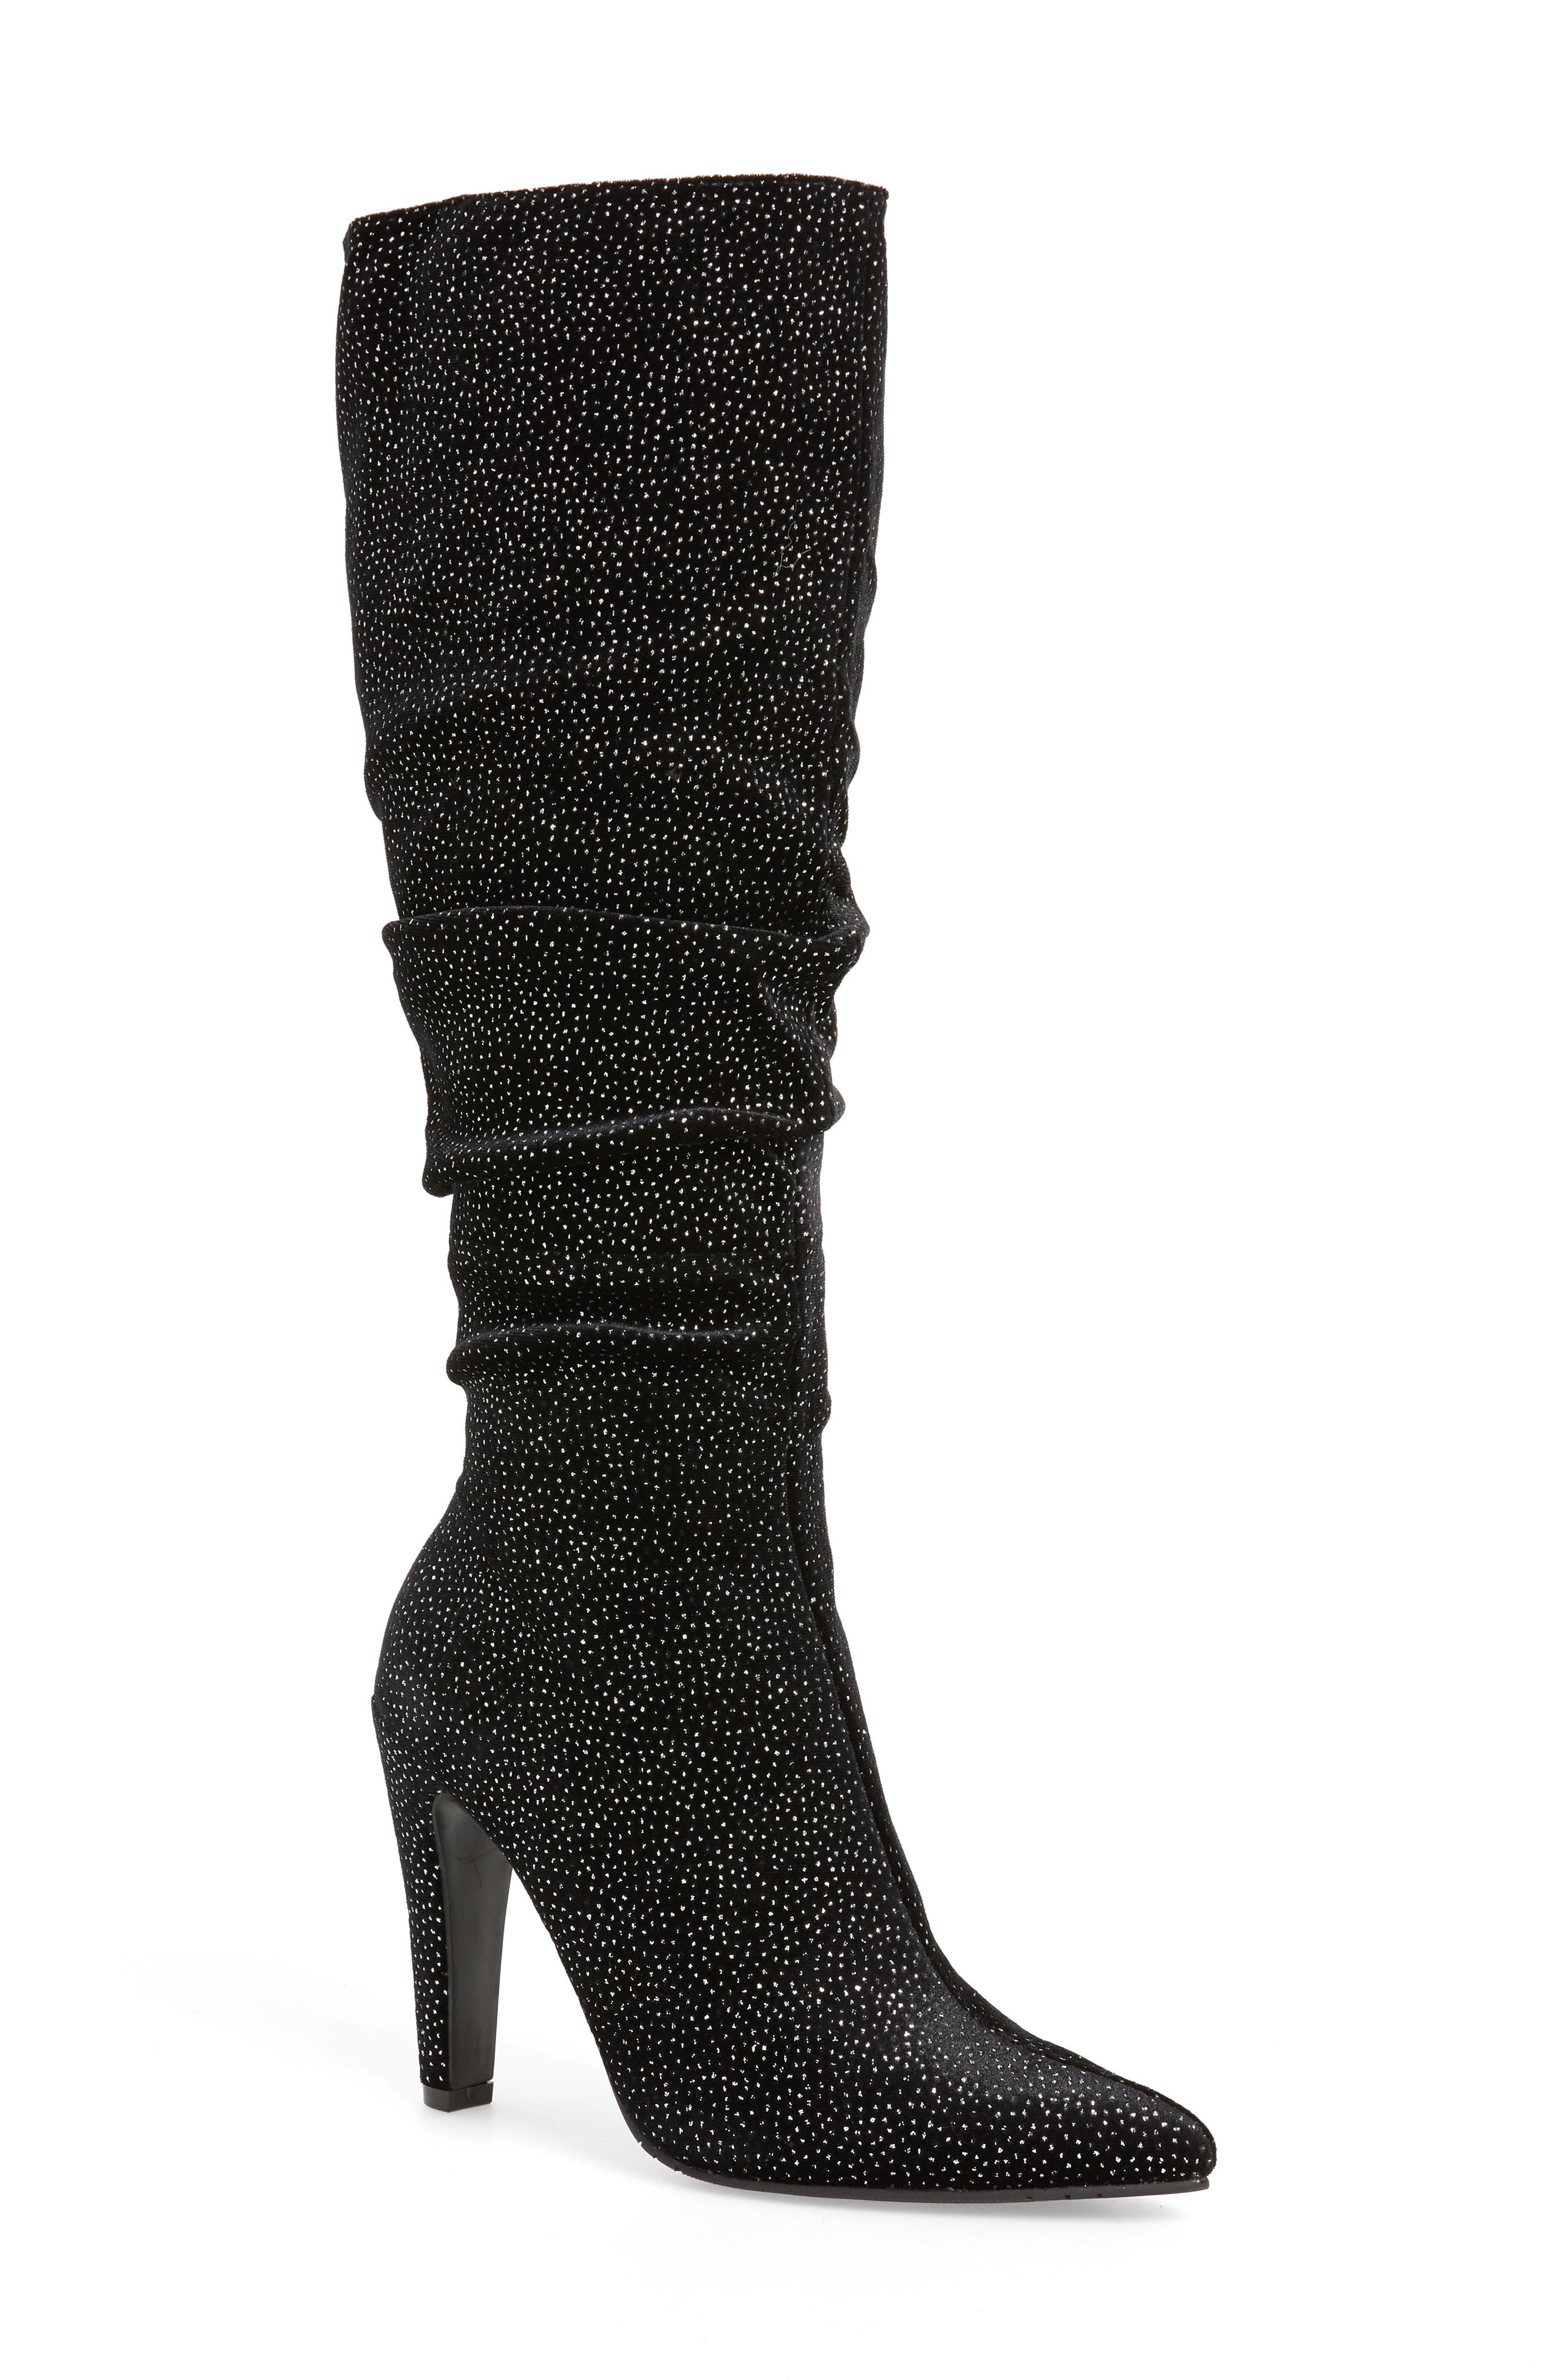 UPC 716142077748 product image for Women's Nina Diandra Knee High Boot, Size 7.5 M - Black | upcitemdb.com